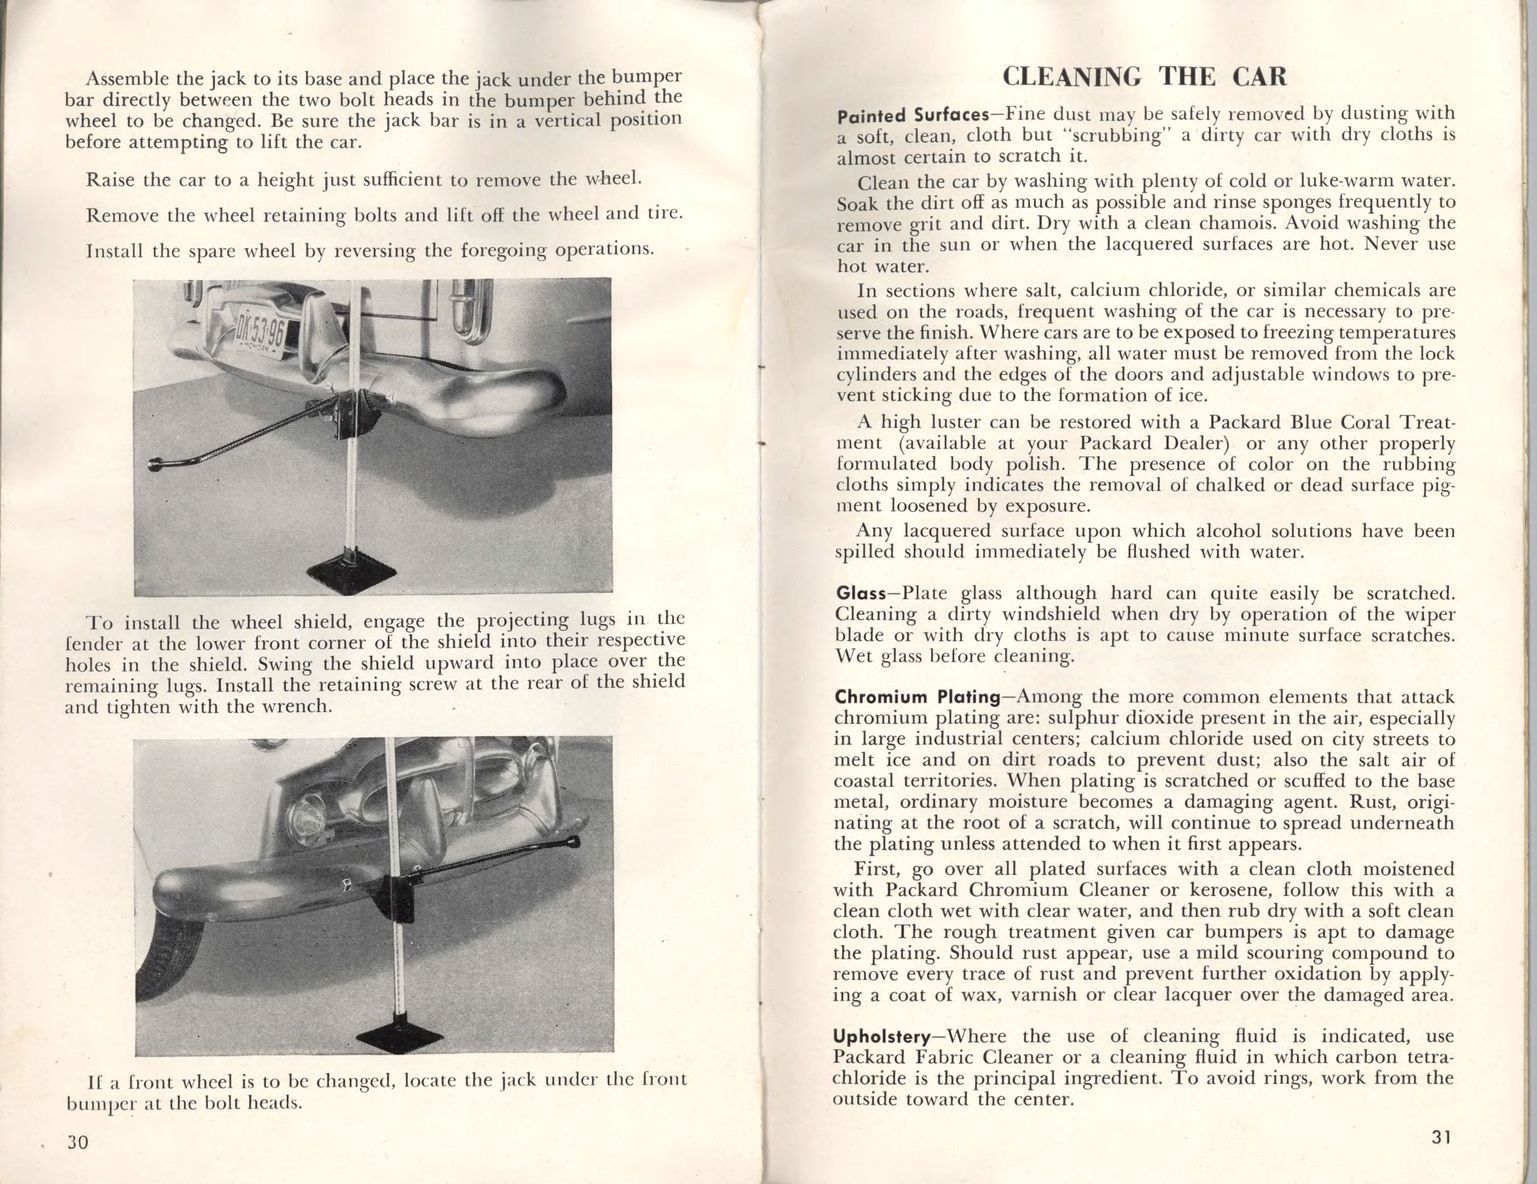 1951_Packard_Manual-30-31